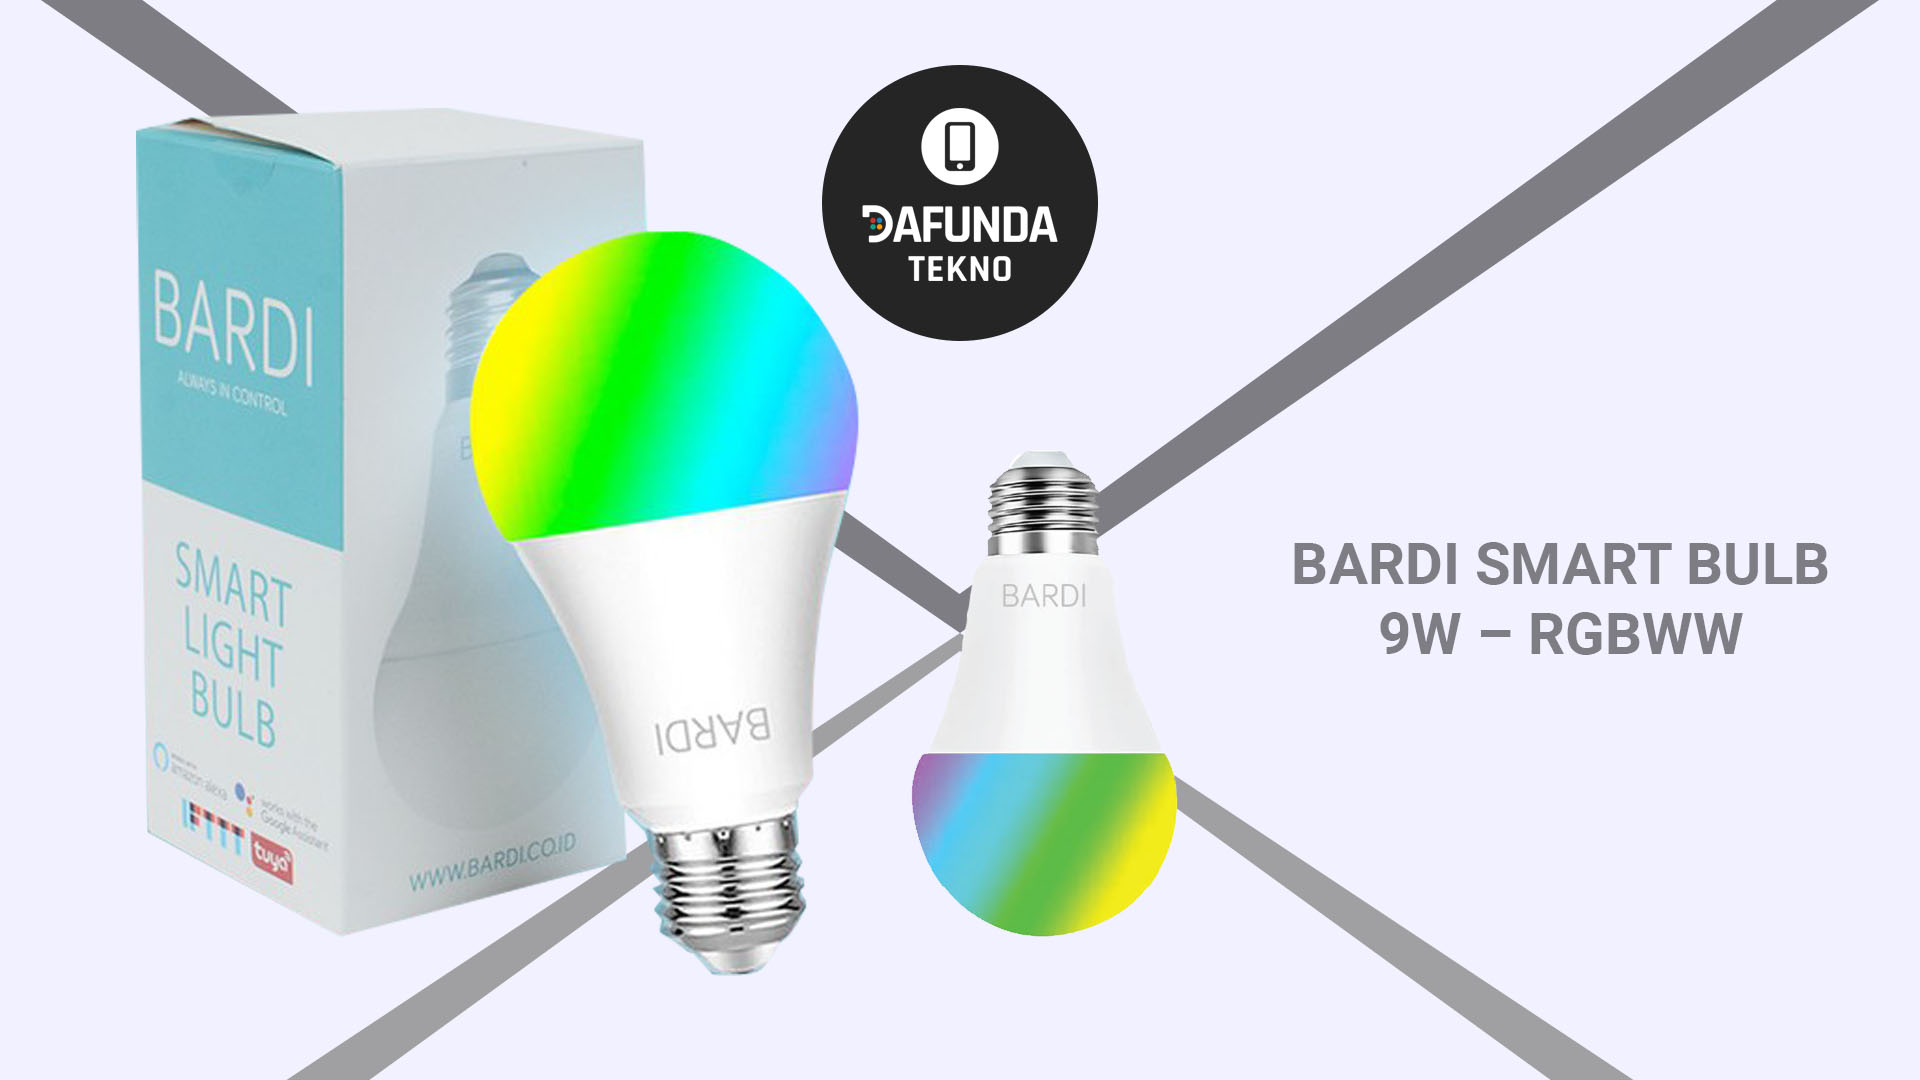 Bardi Smart Bulb 9w – Rgbww